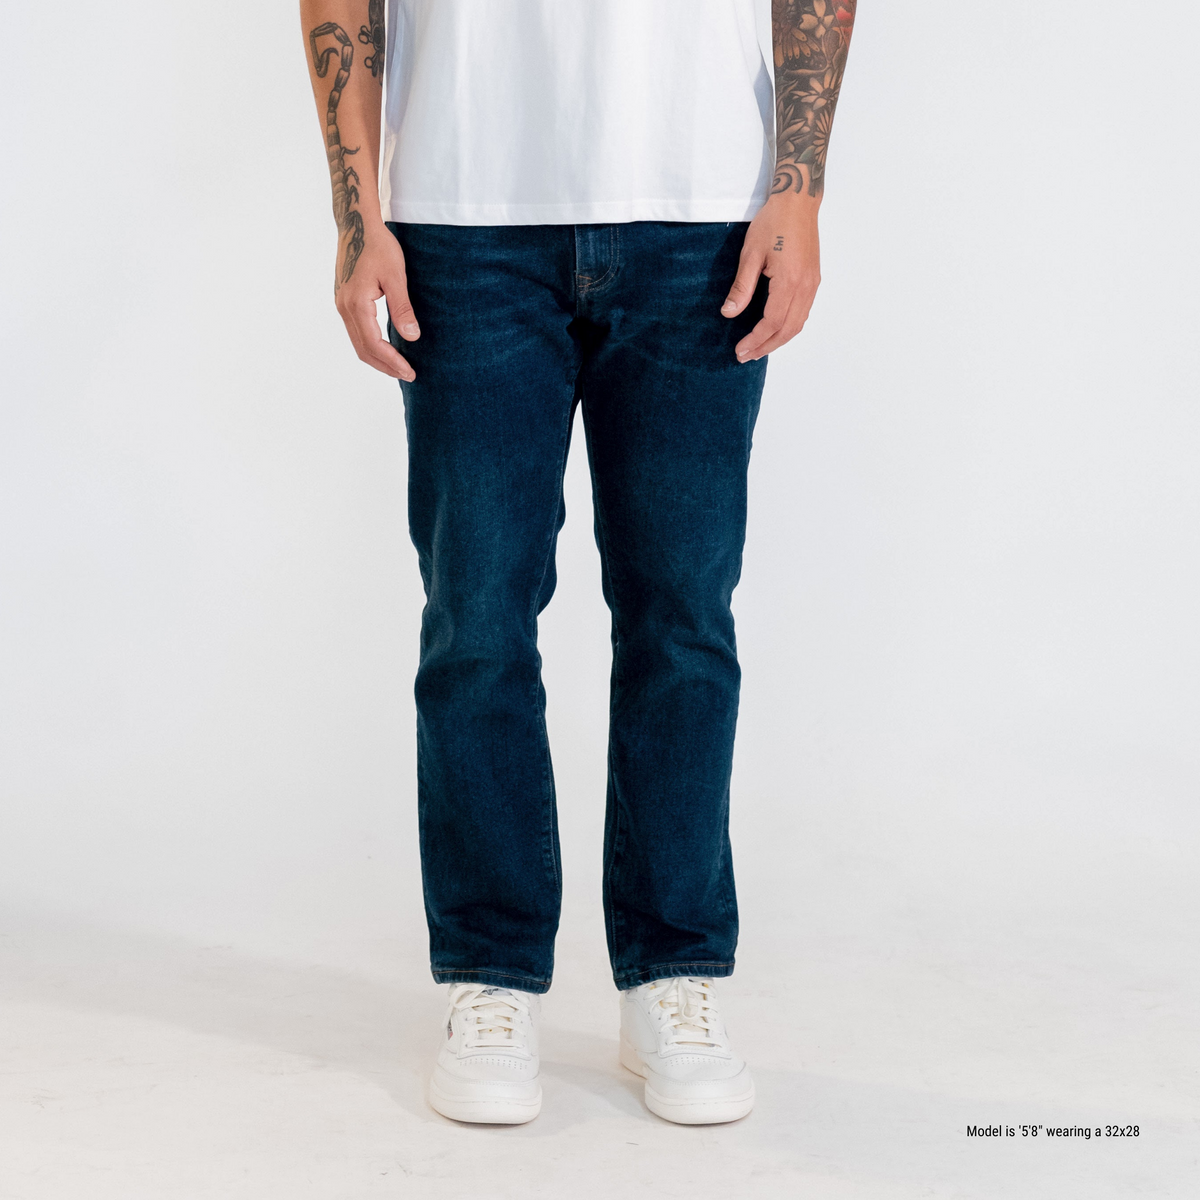 Shorter Men Abbreviated Slim Apparel – Jeans Fit for